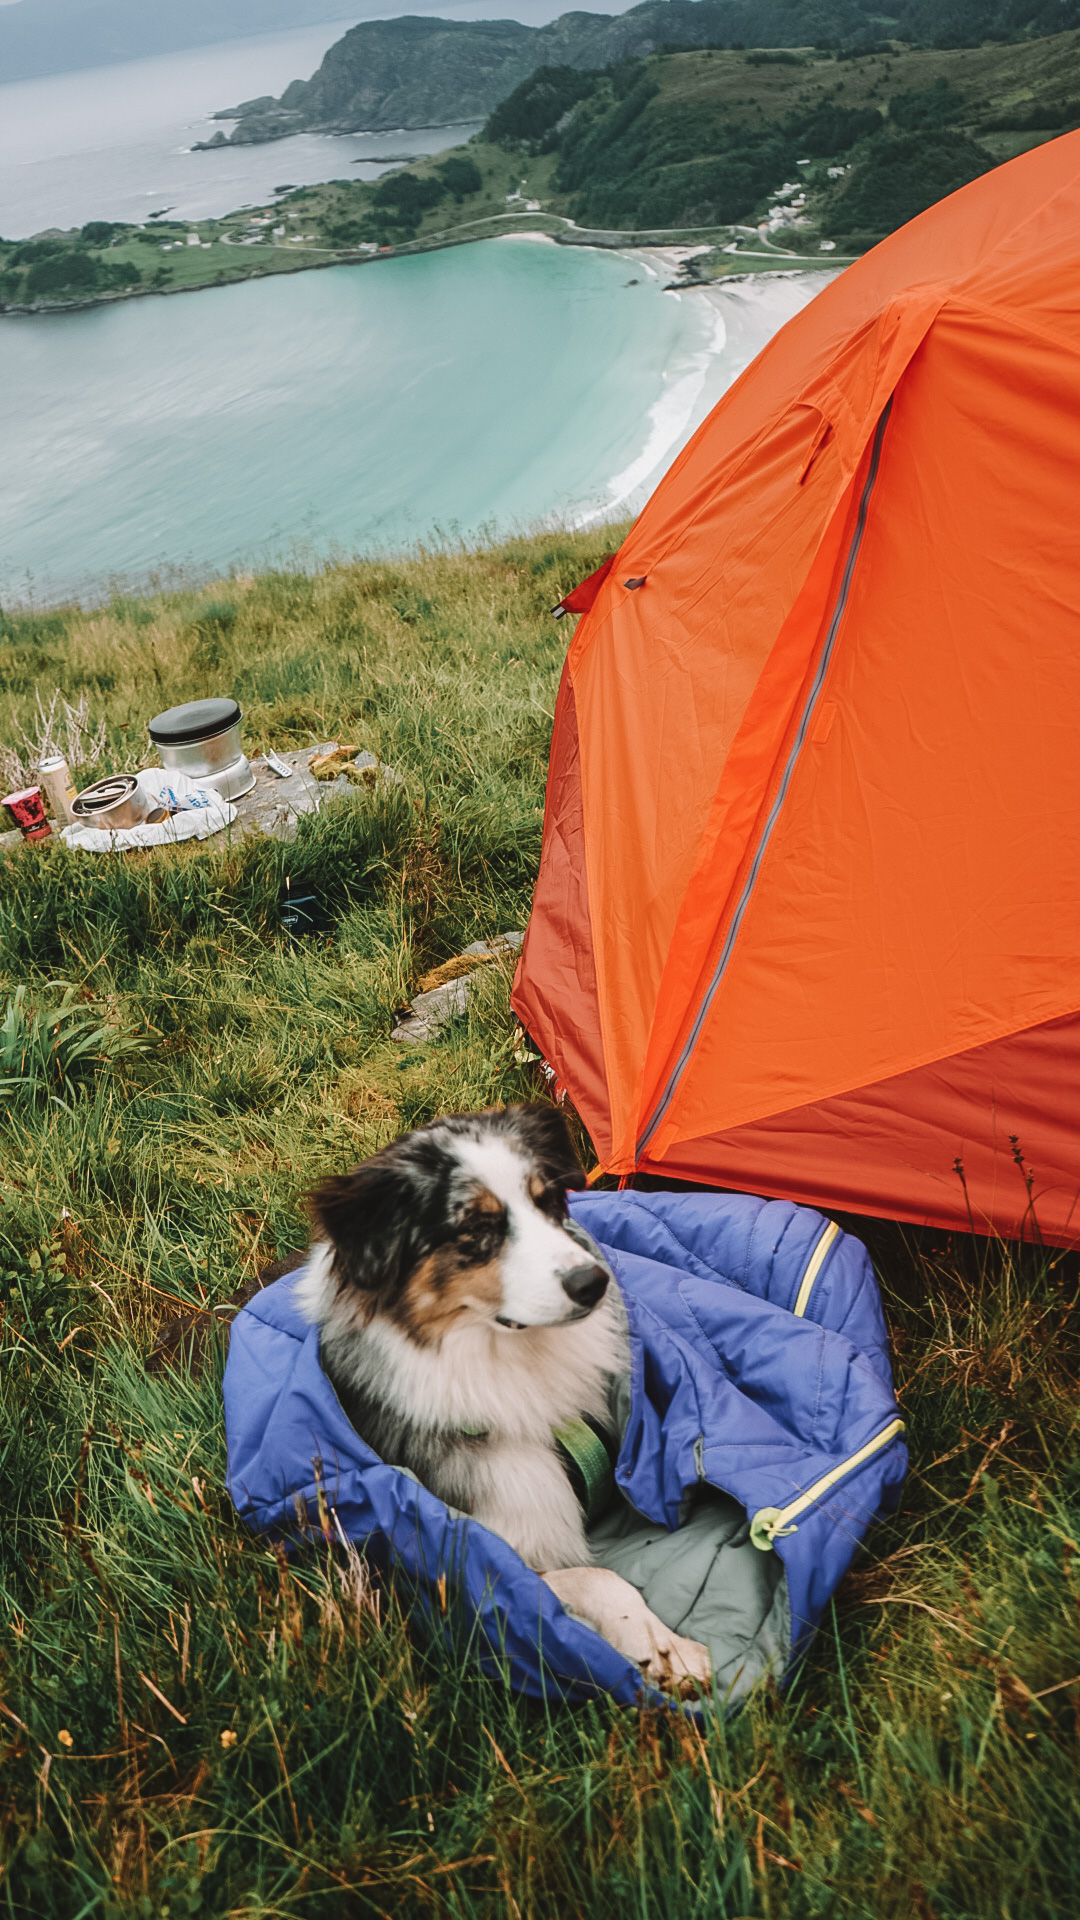 Refsviksanden+Hike+Dog+Norway+Camping+Tent